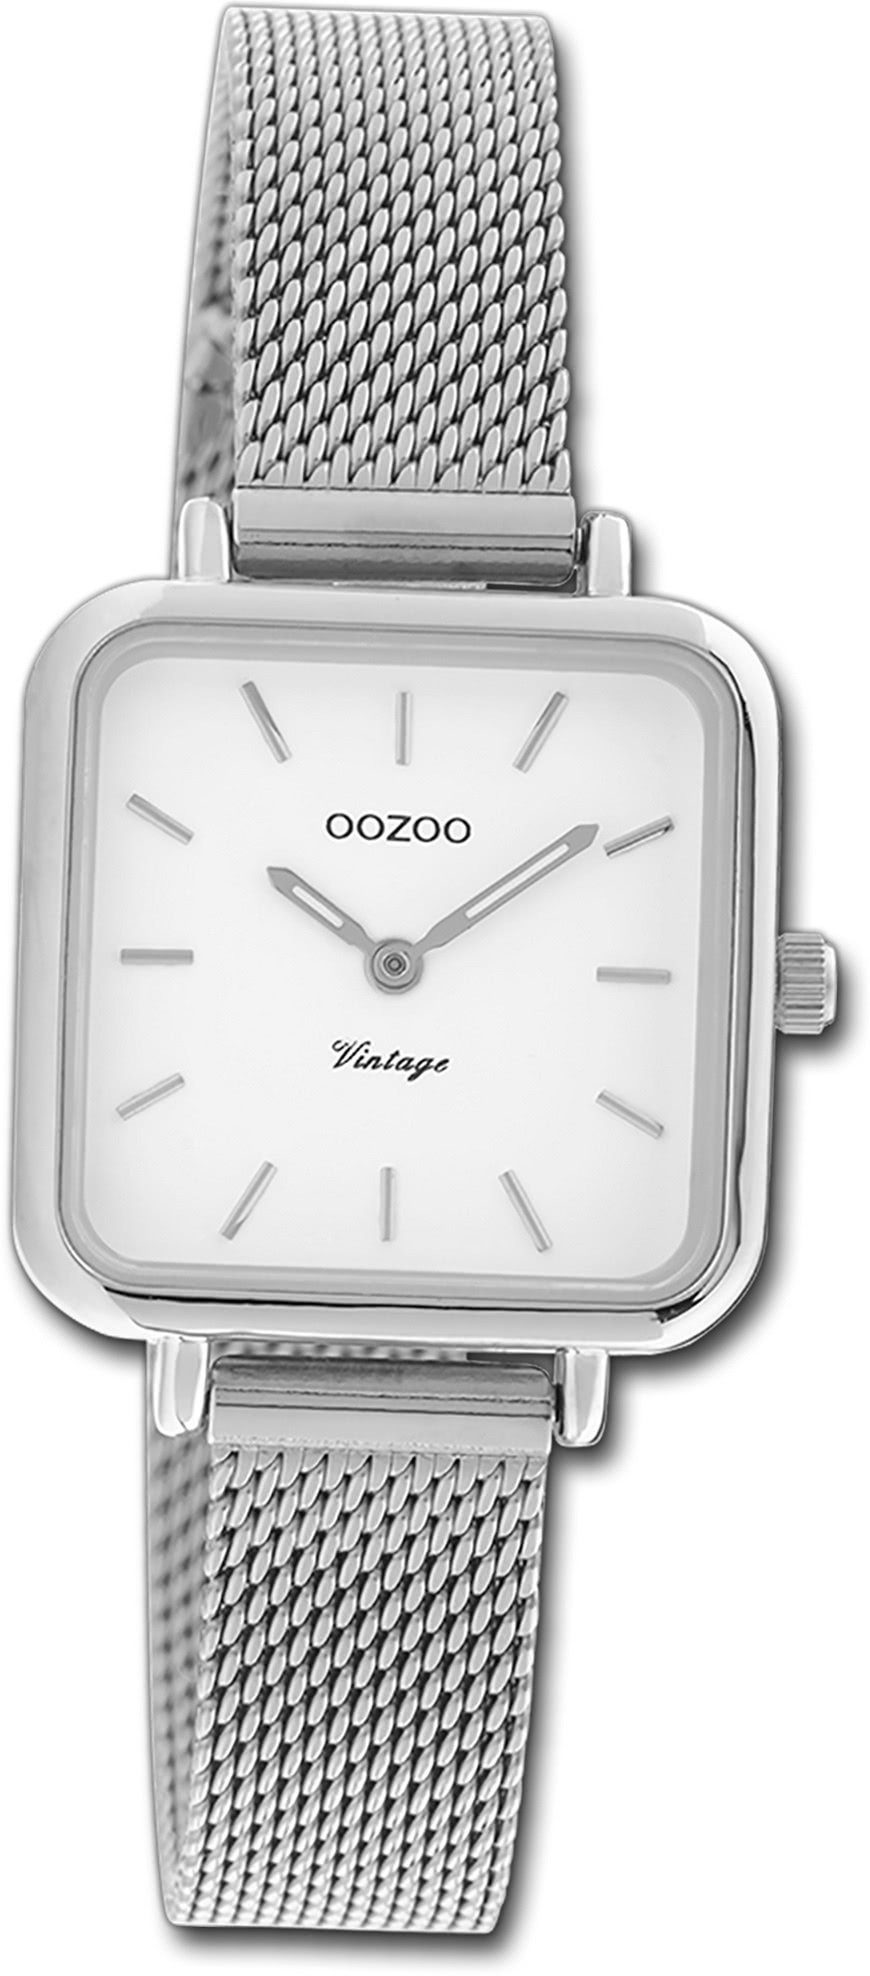 klein OOZOO Gehäuse, Quarzuhr (ca. Damen Damenuhr Vintage Mesharmband rechteckiges Armbanduhr 26x26mm) Series, Oozoo silber,